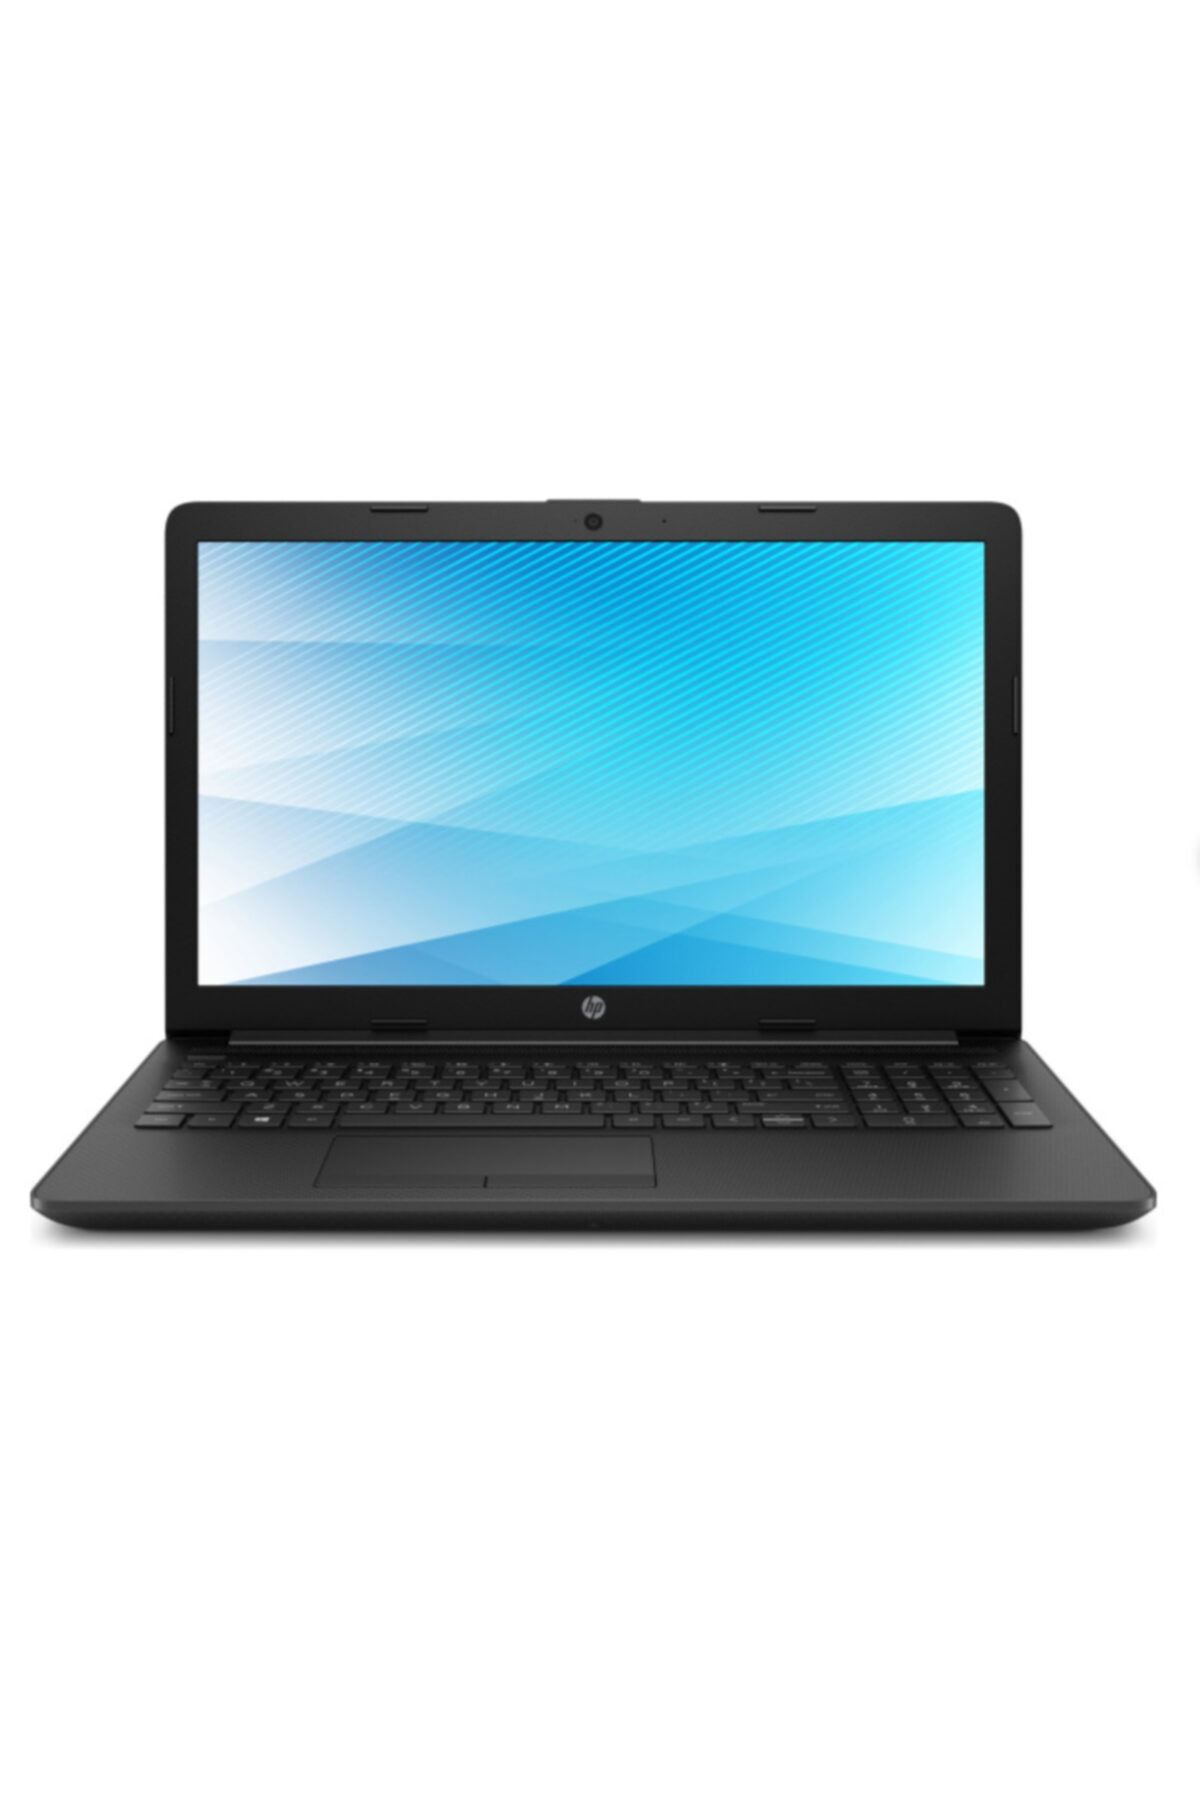 HP 1s7x3ea Intel Core I5-10210u 8gb 256gb 15.6 Freedos Taşınabilir Bilgisayar 1s7x3ea